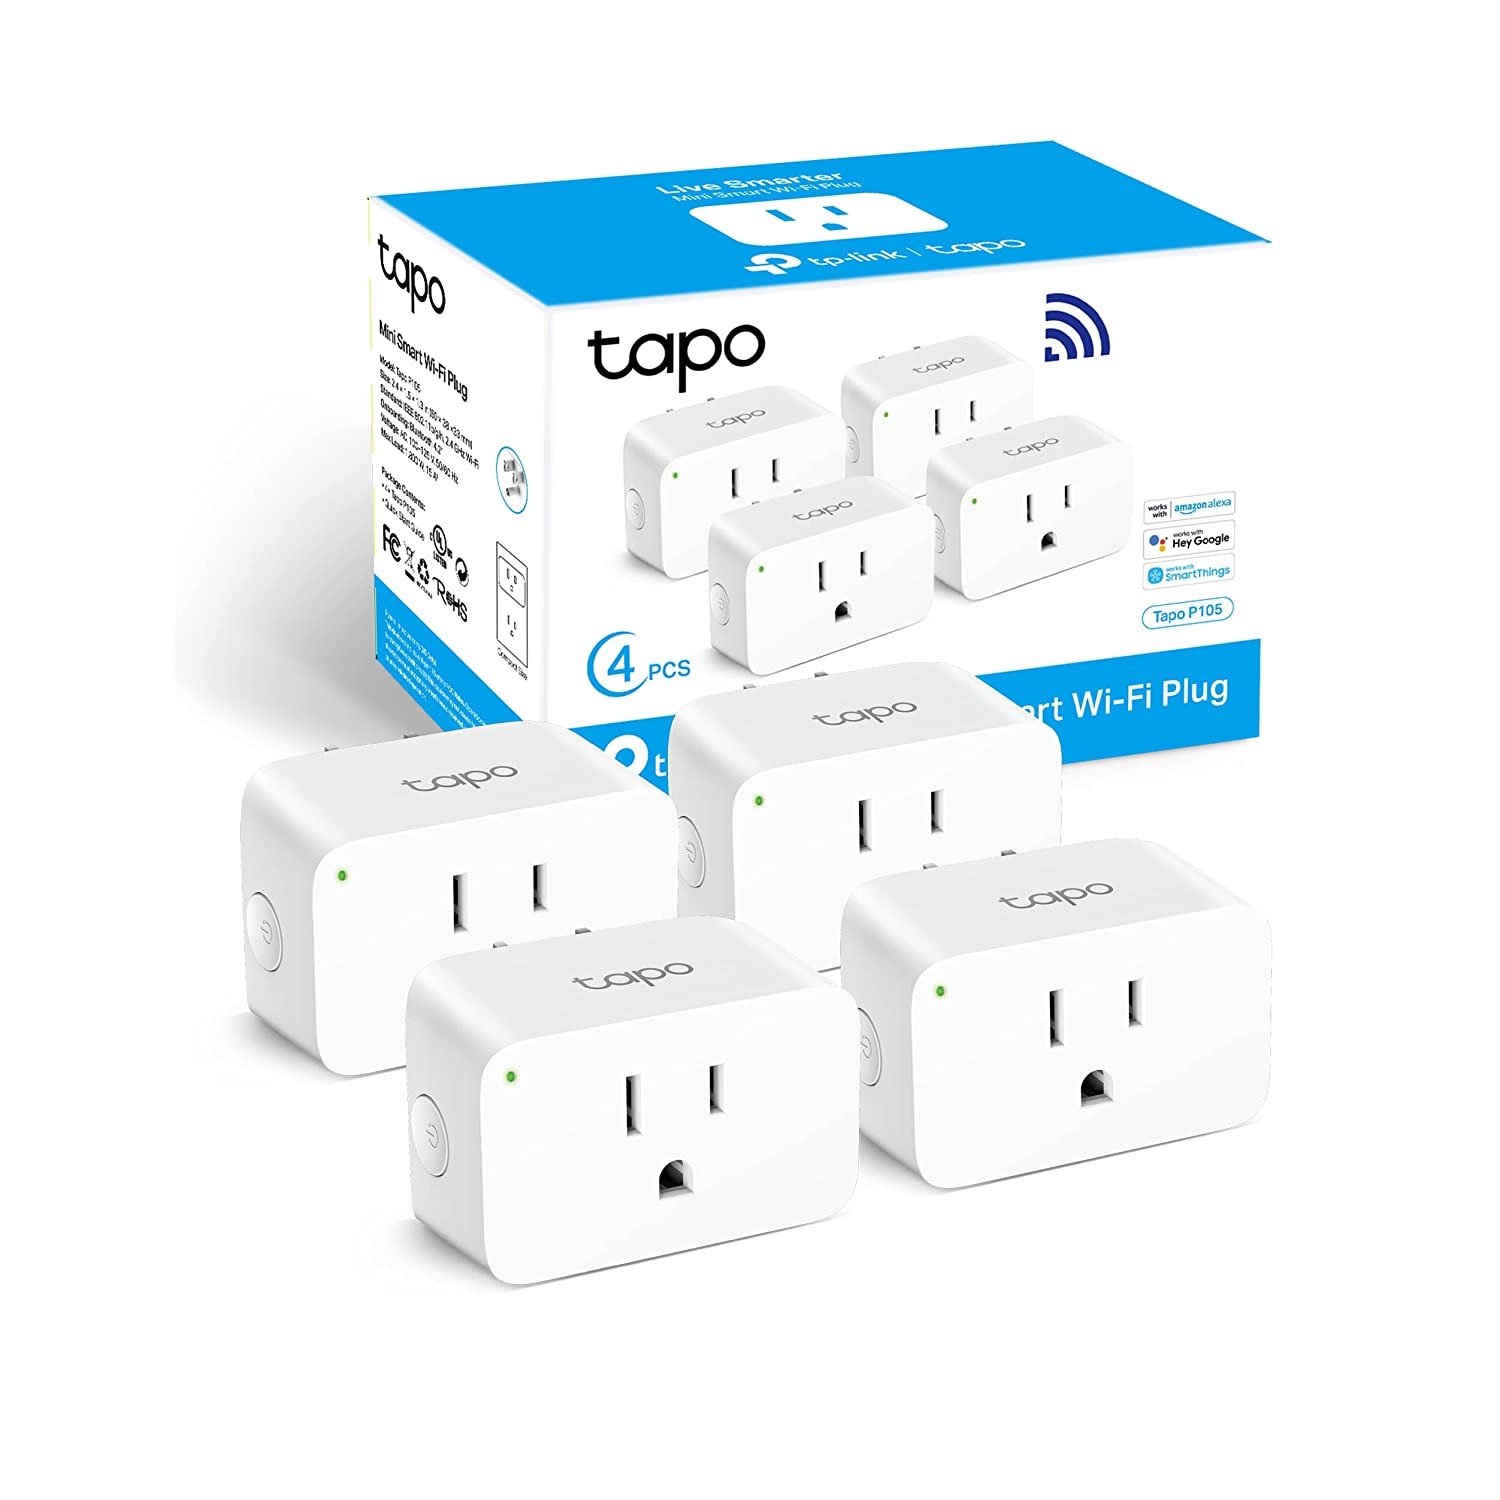 Tapo P105 | Mini Smart Wi-Fi Plug